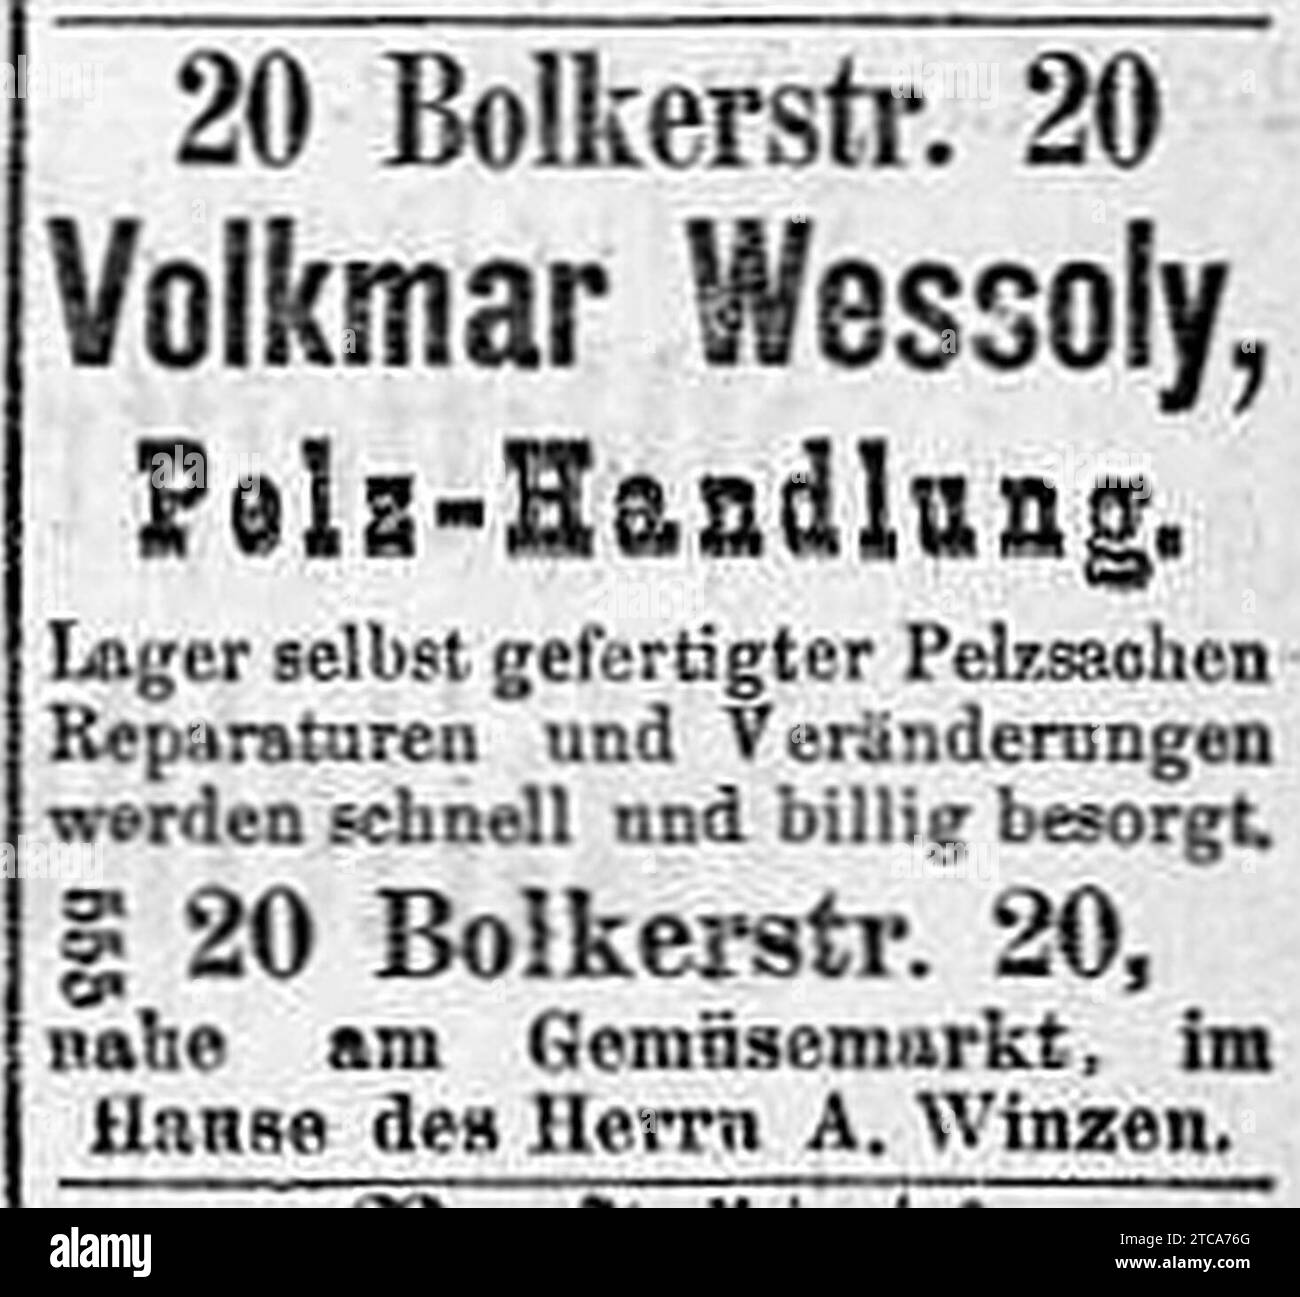 Pelz-Handlung Volkmar Wessoly, Düsseldorf (Anzeige Düsseldorfer Volksblatt 5.11.1875 (No. 295). Stock Photo